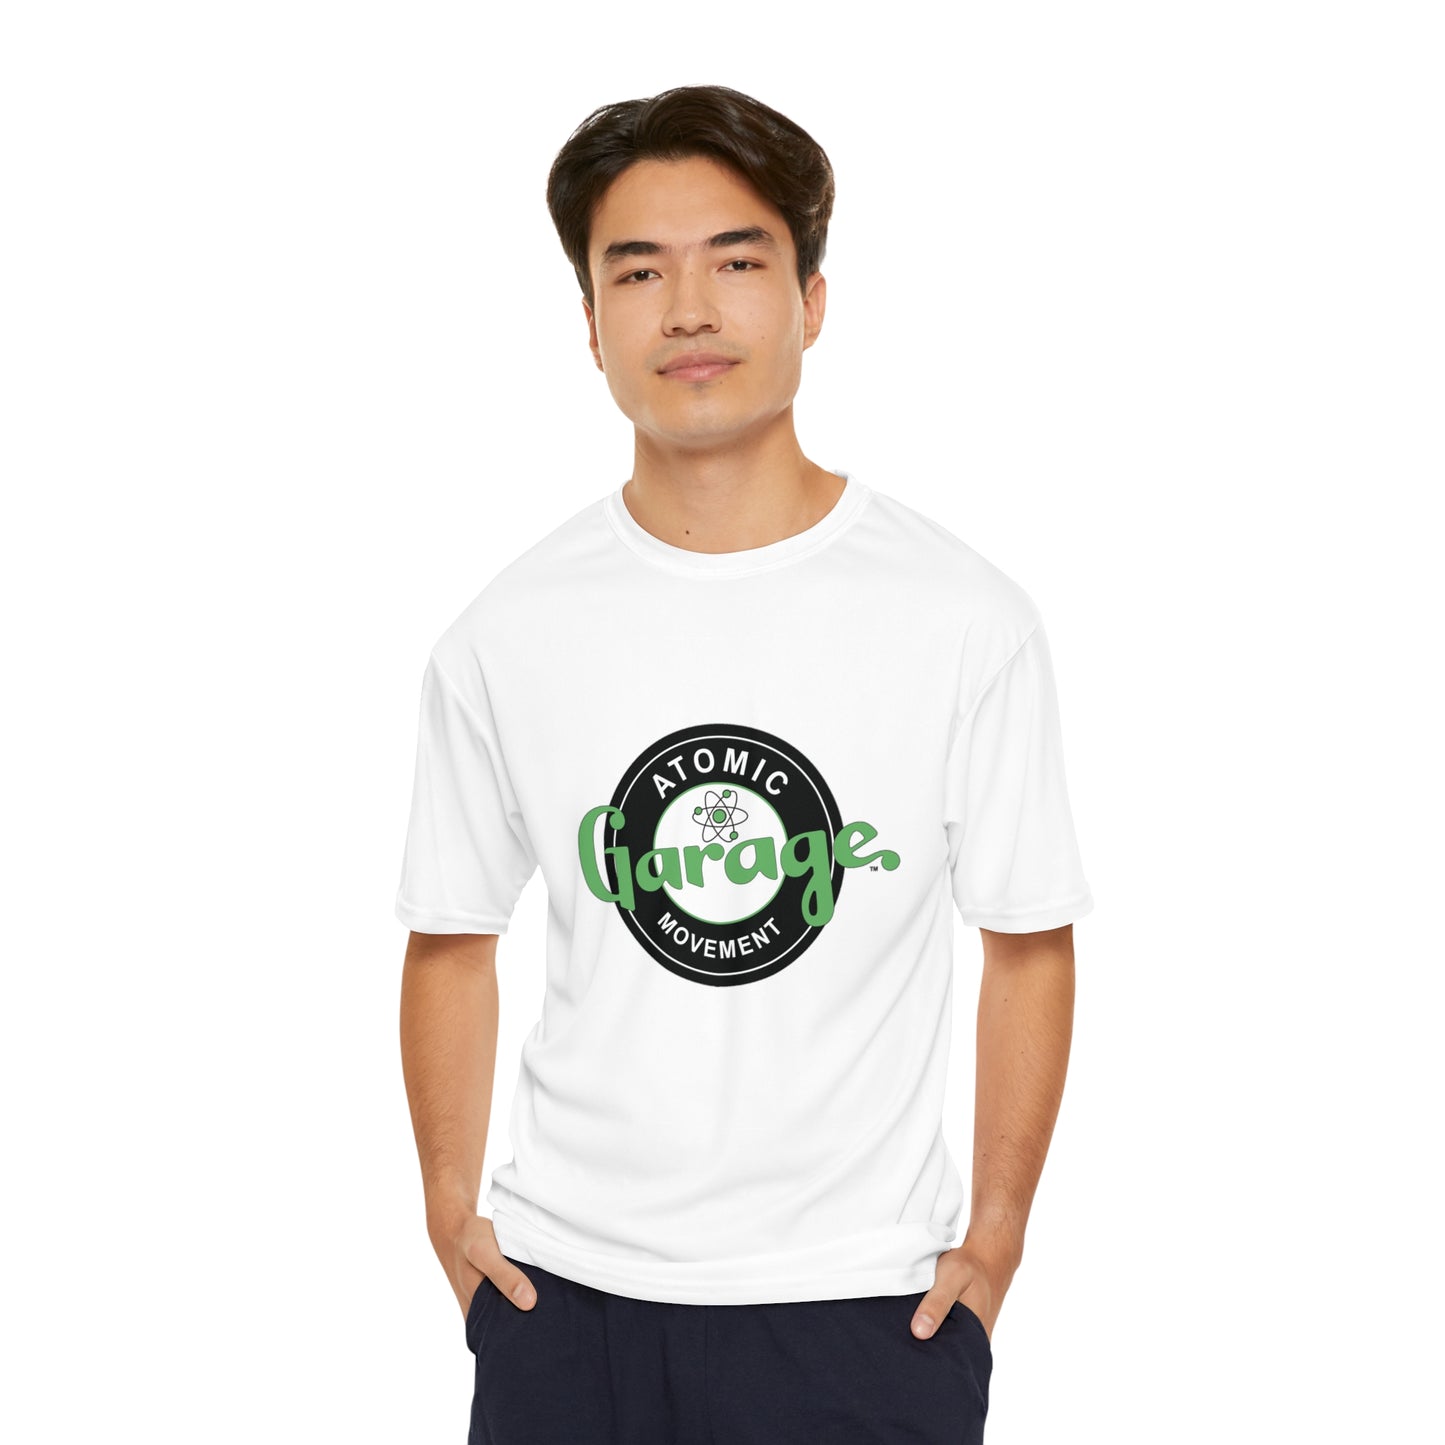 Atomic Garage Movement - Sports Performance T-Shirt